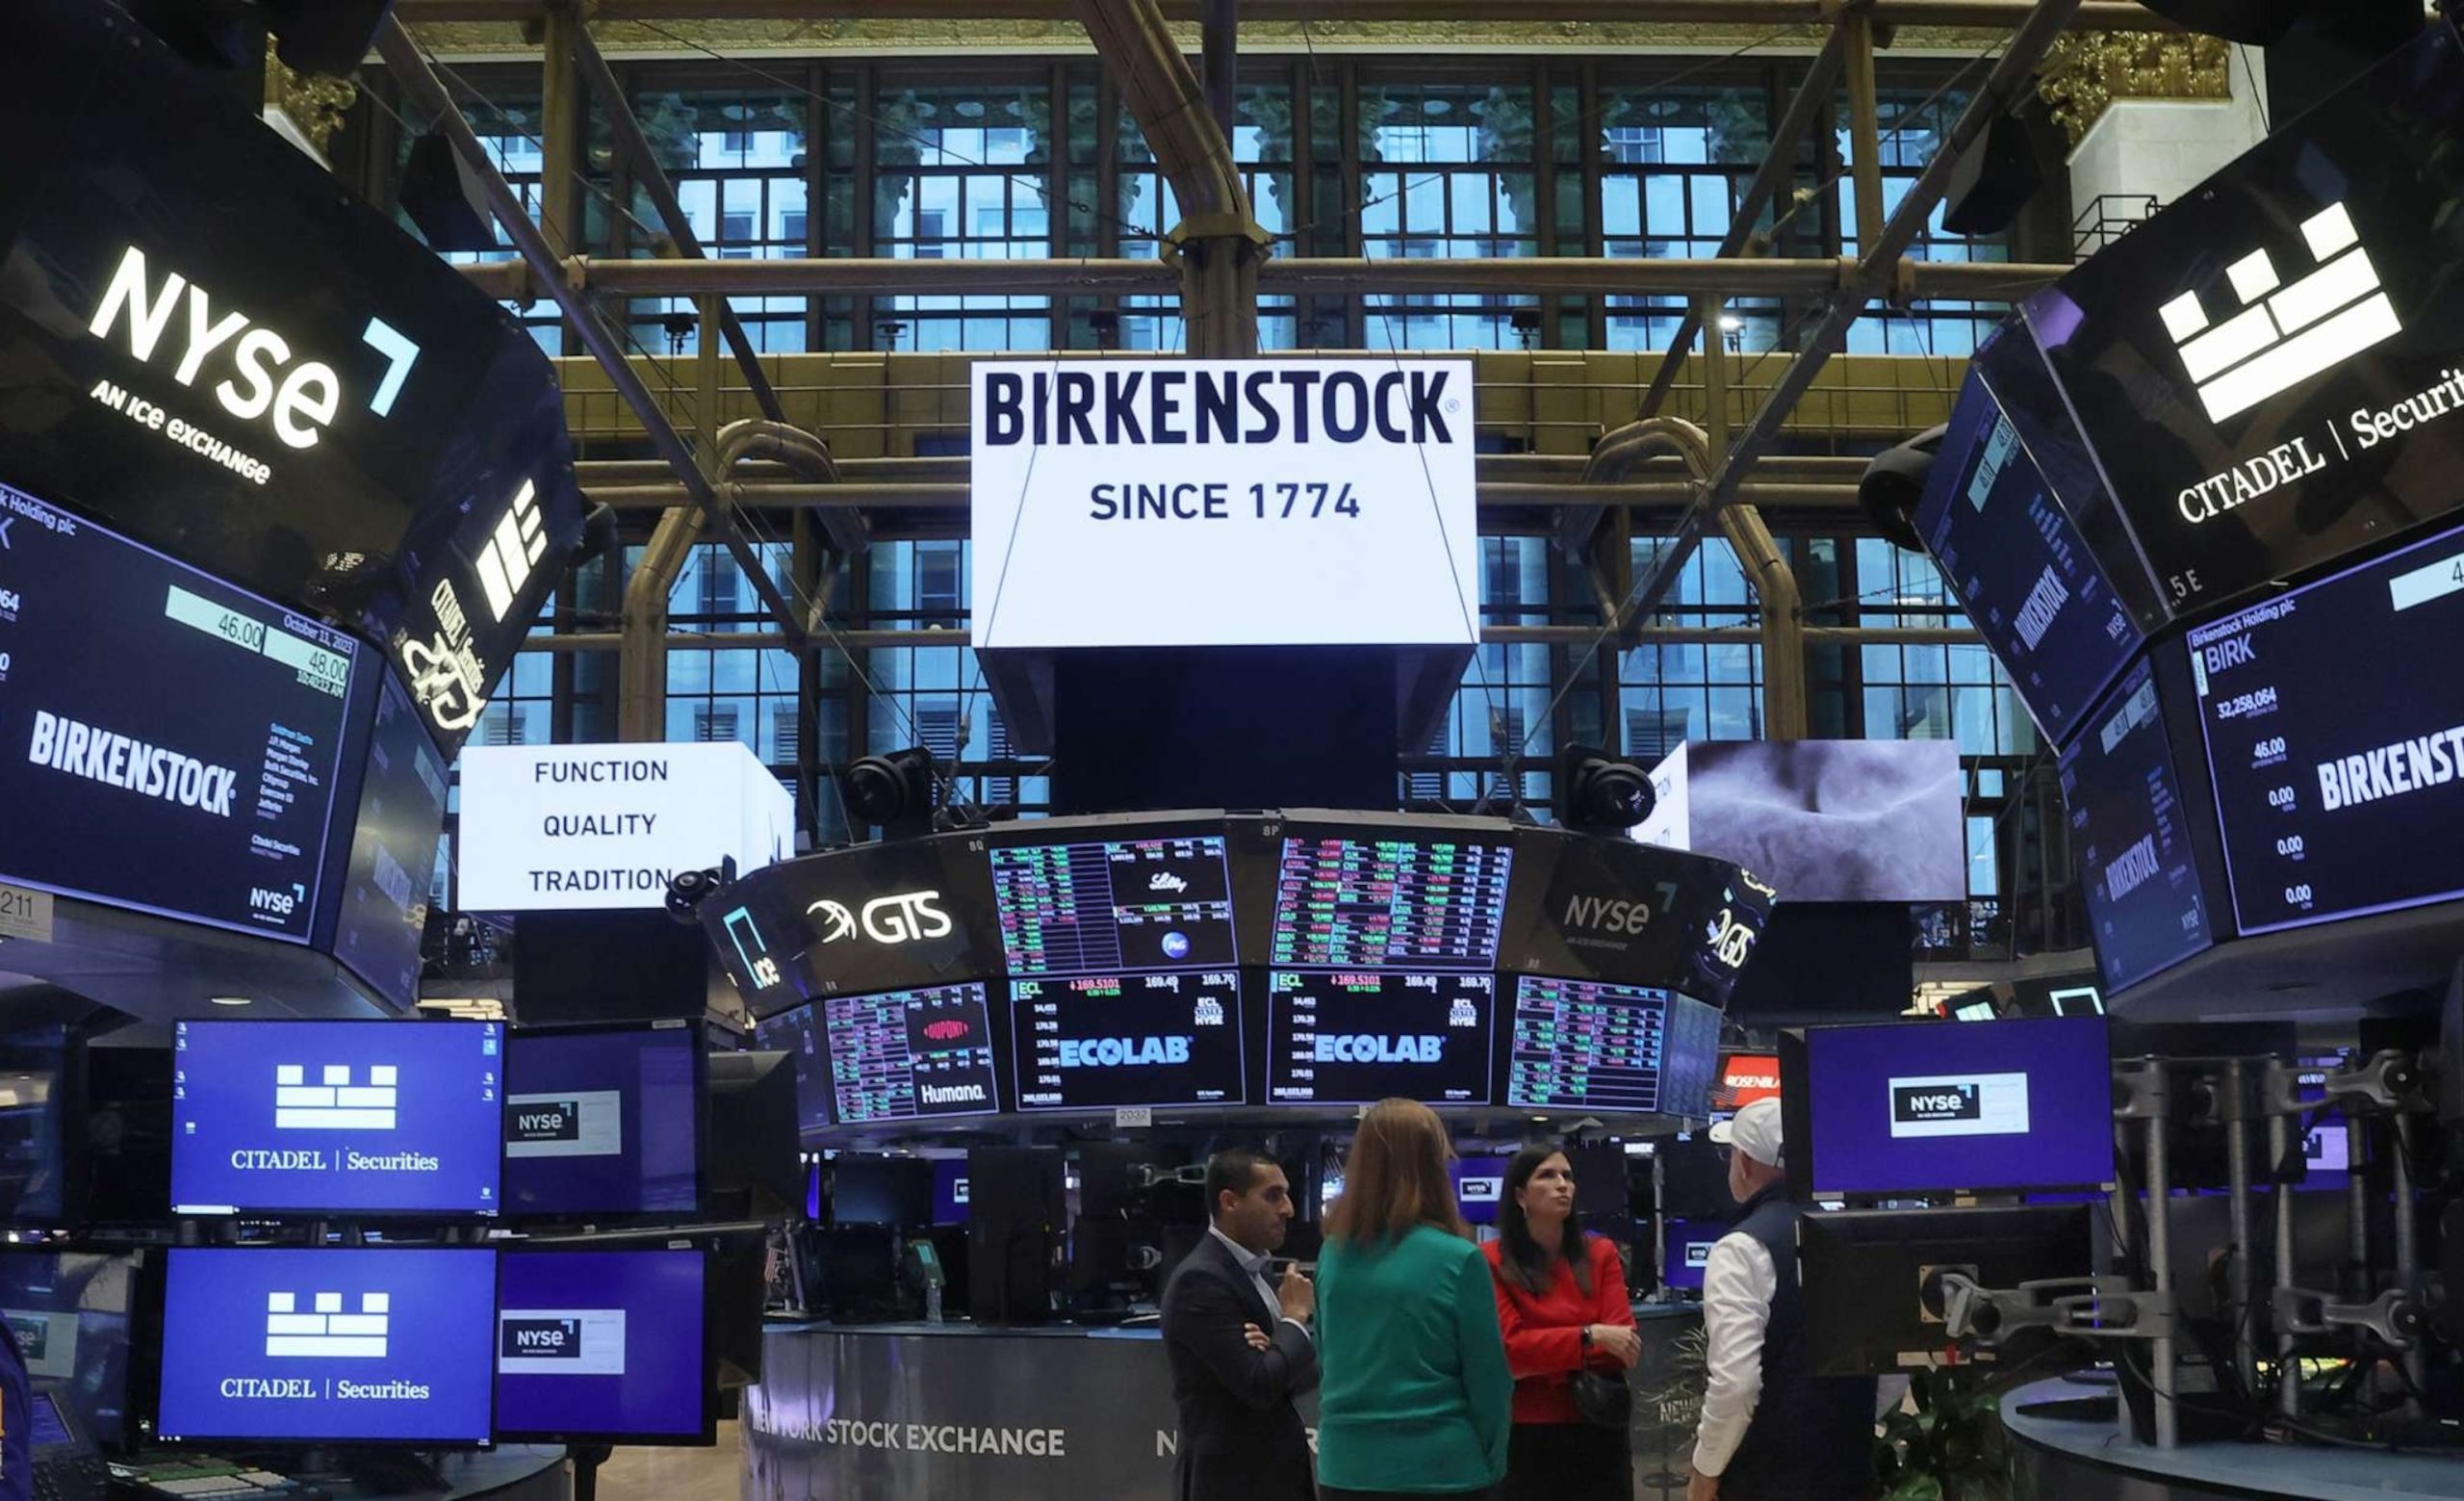 Birkenstock's Initial Public Offering on the New York Stock Exchange